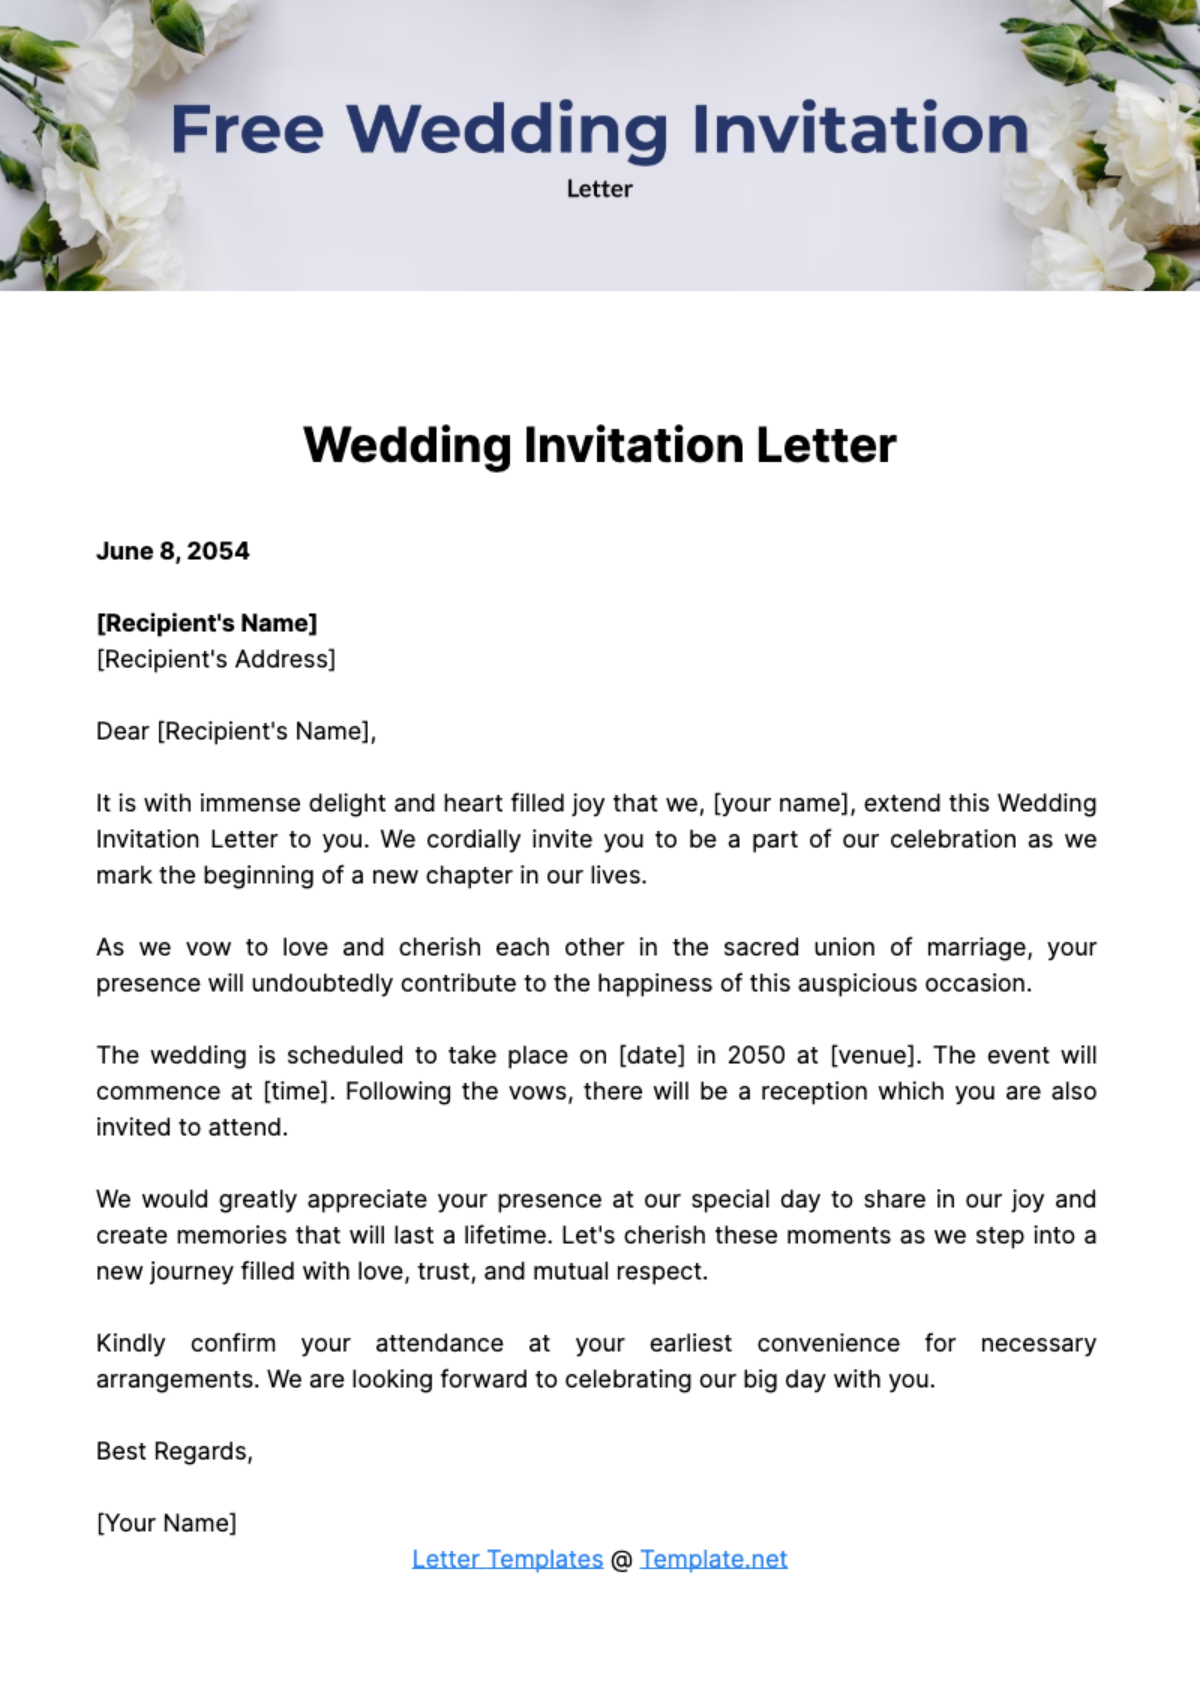 Free Wedding Invitation Letter Template